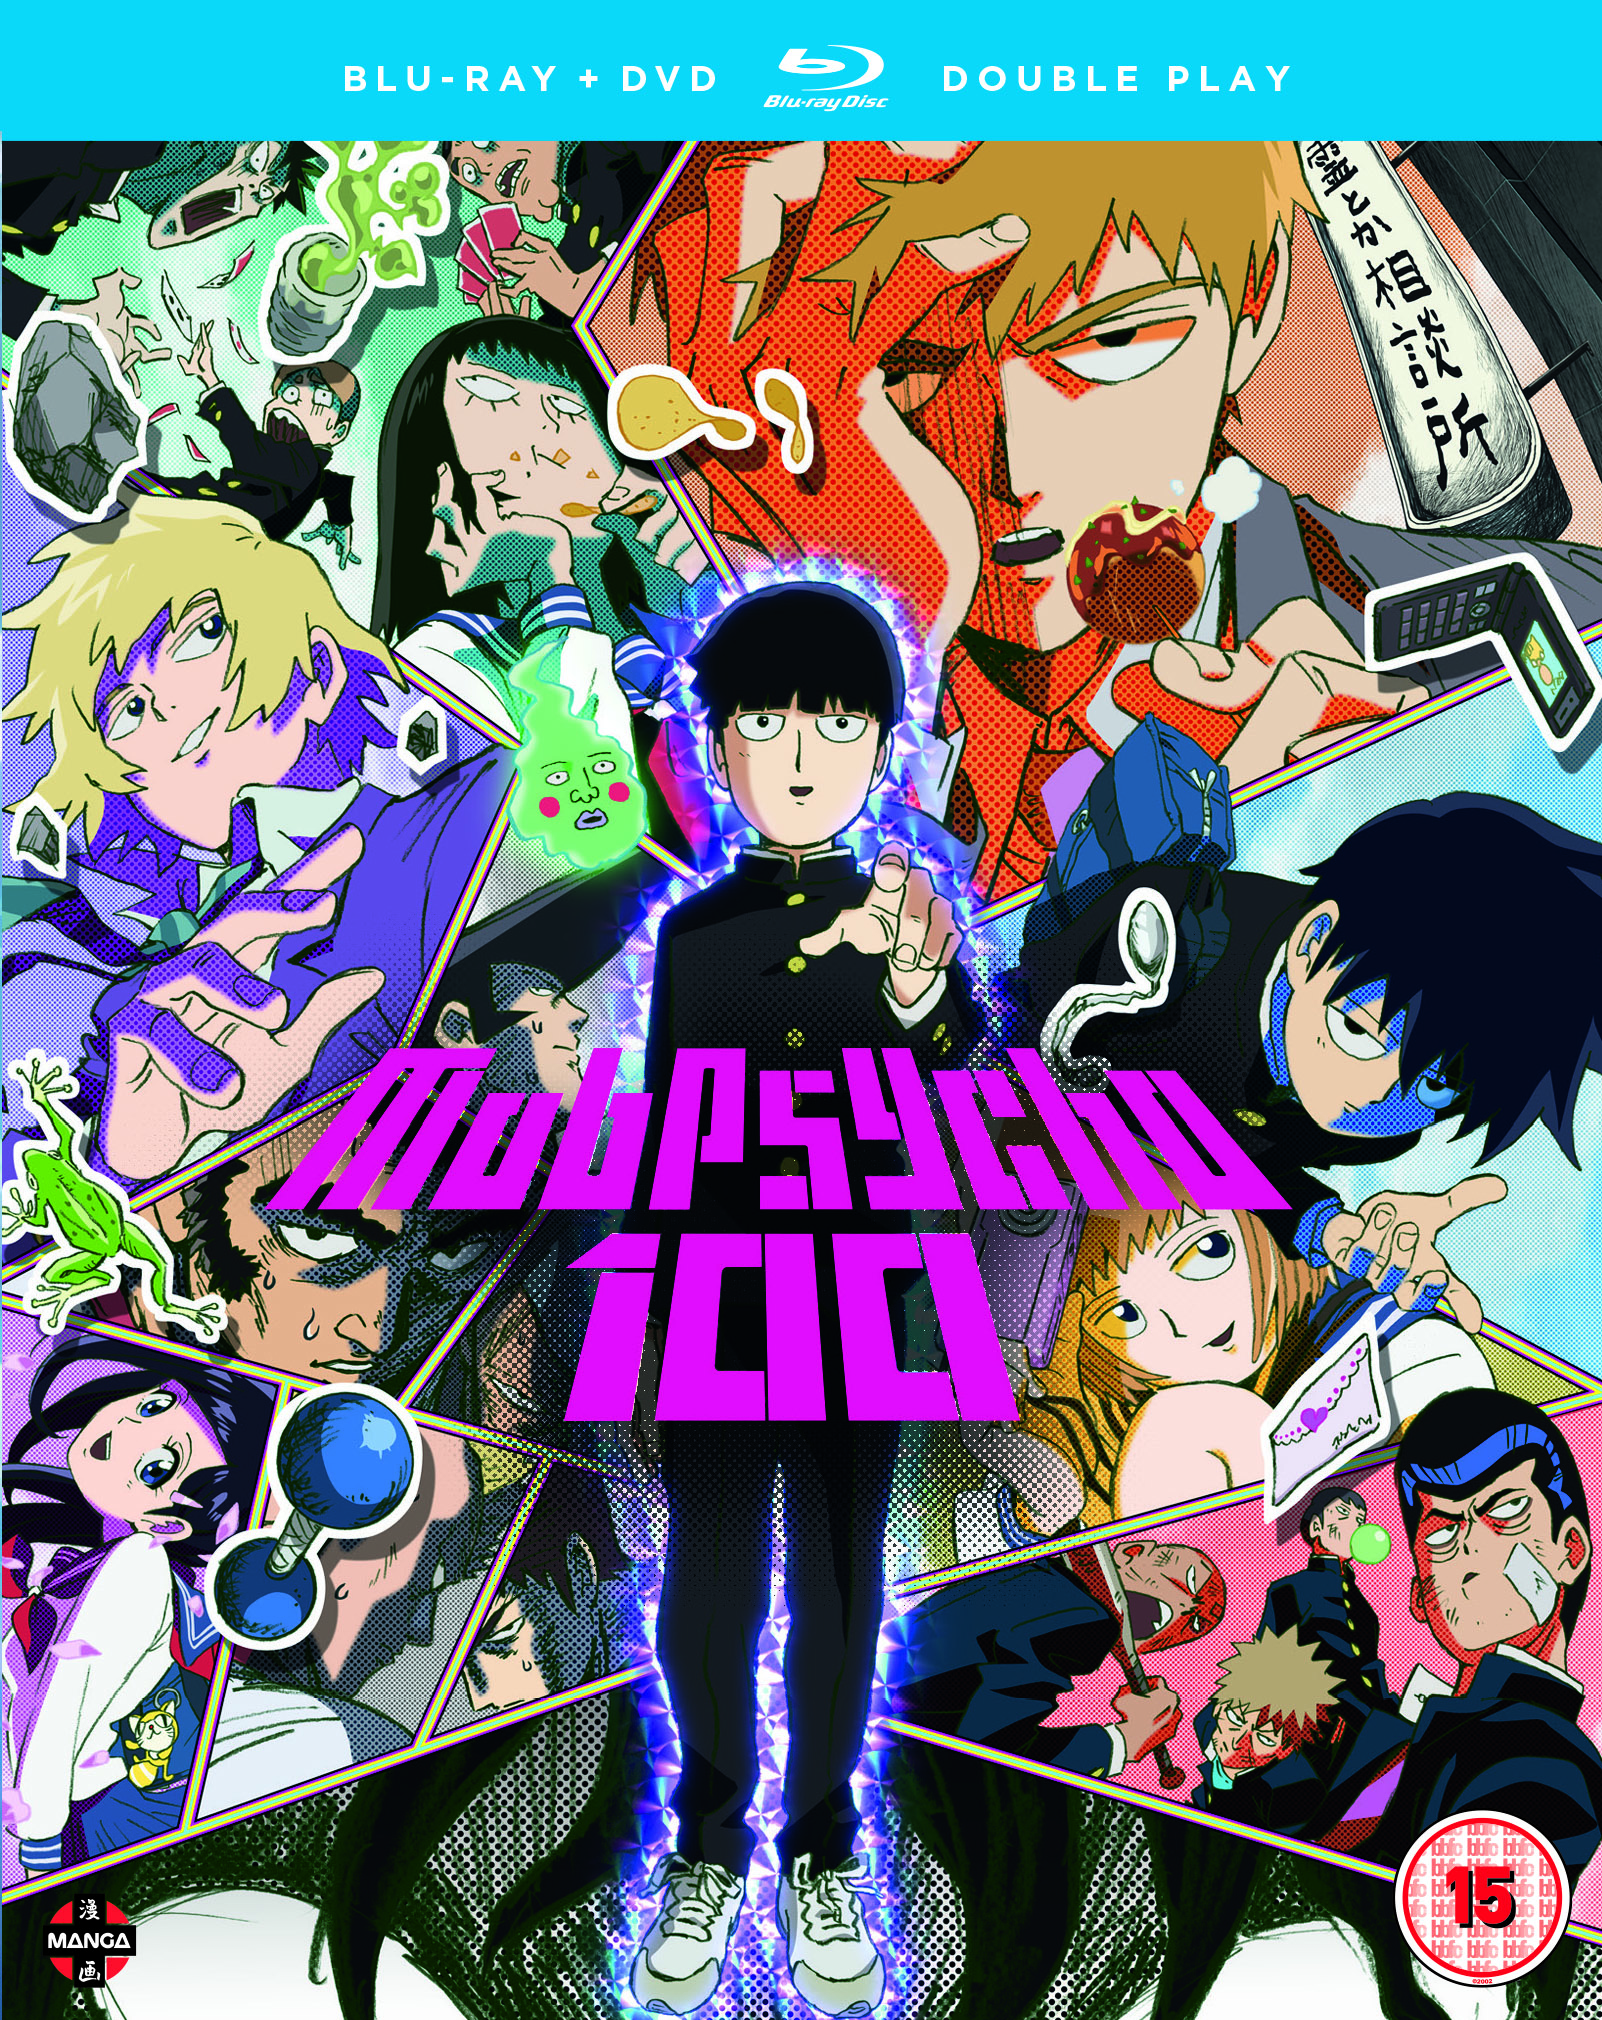 Is Mob Psycho 100 season 3 anime original?